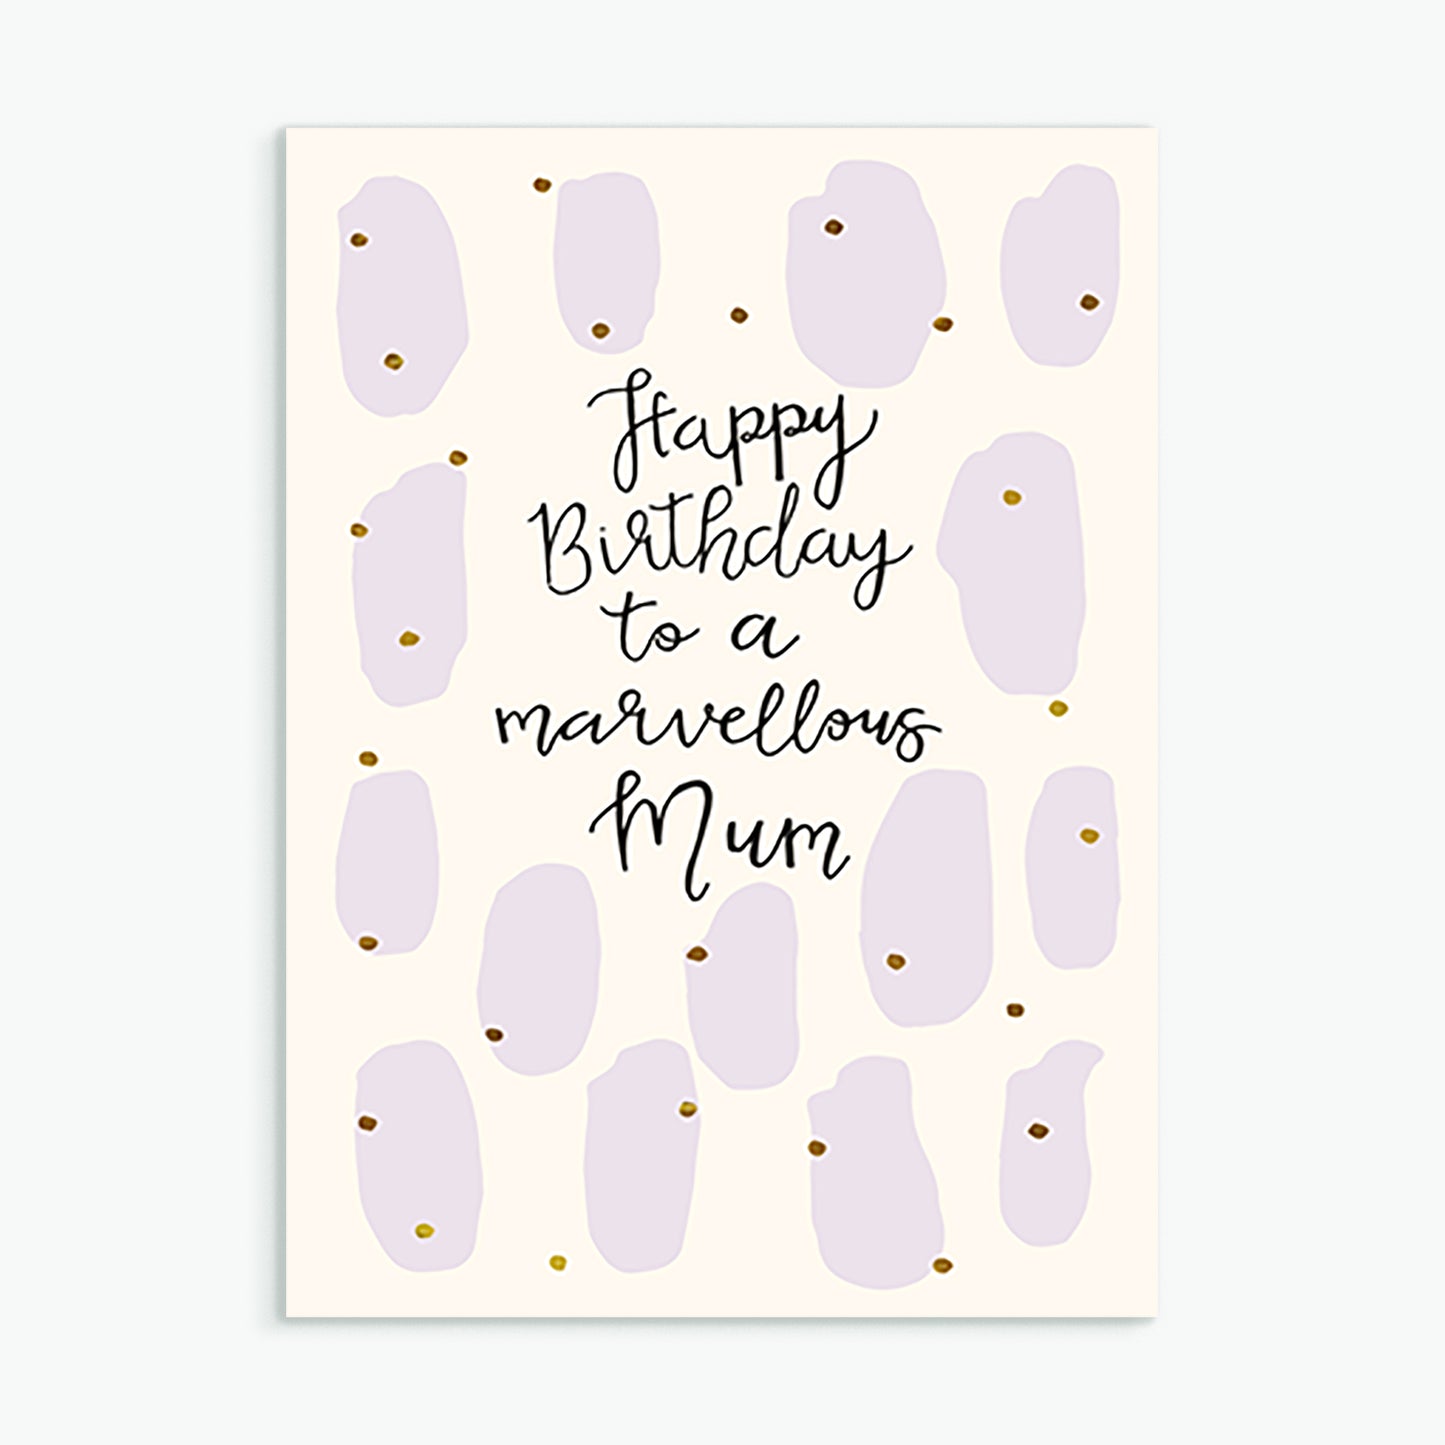 'Marvellous Mum' Birthday Card & Envelope